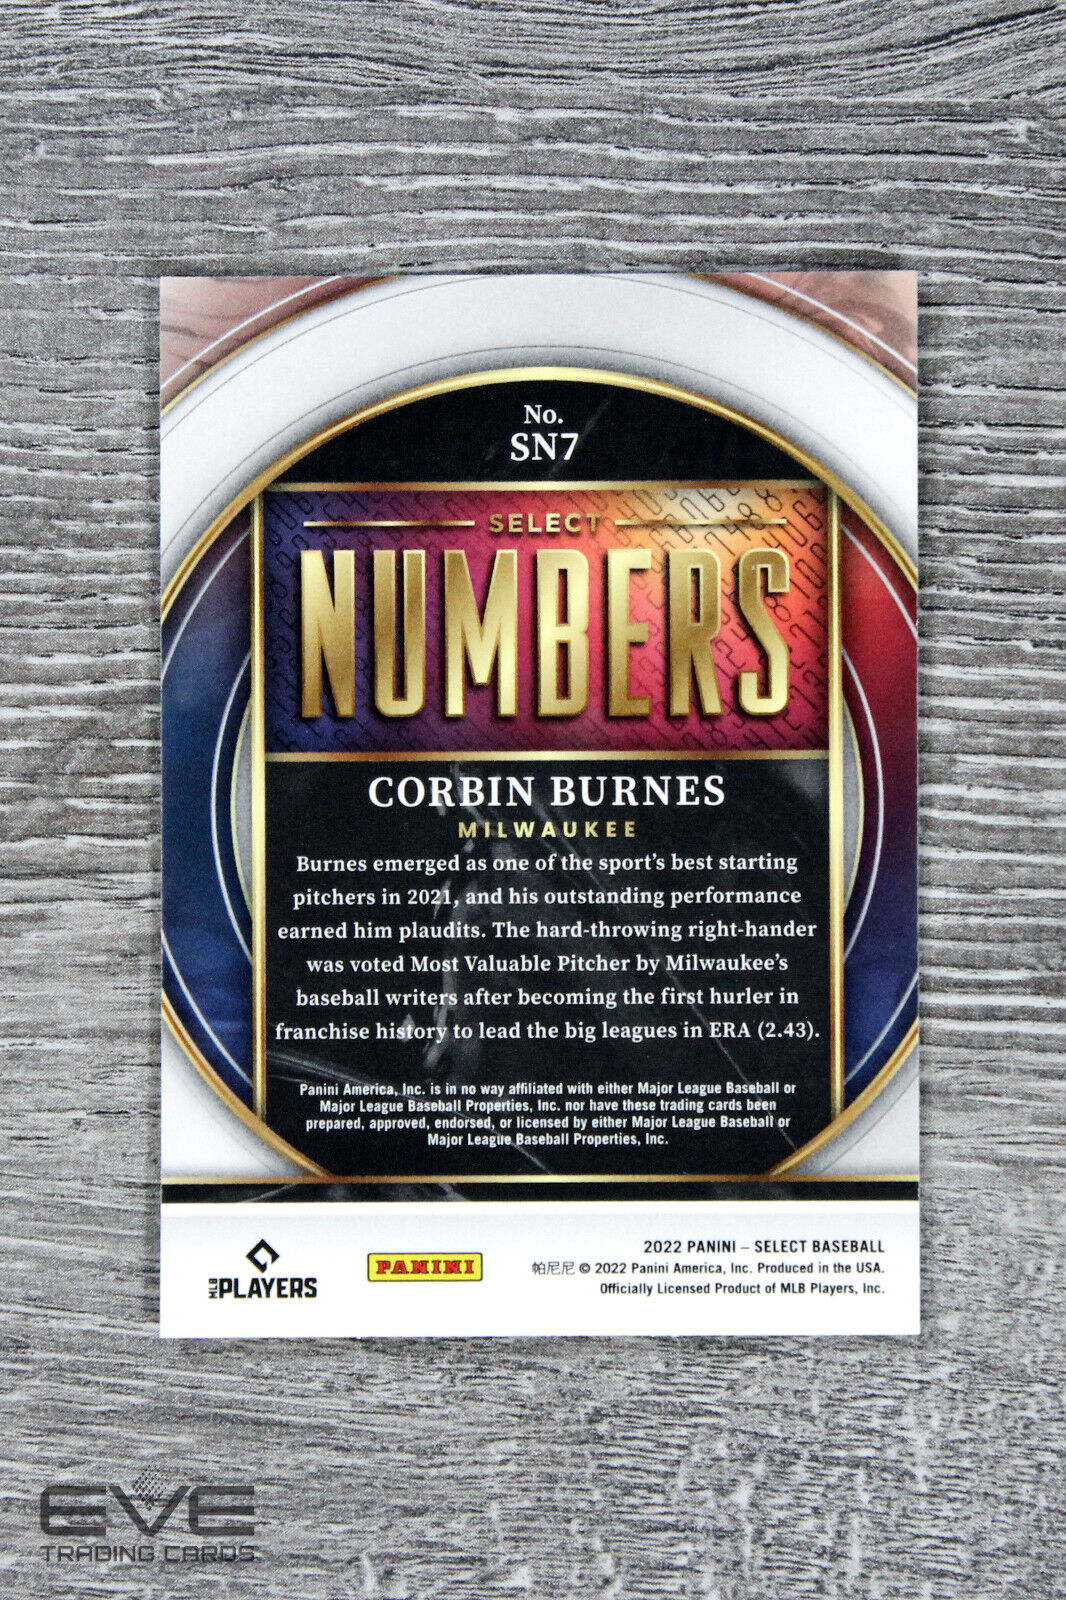 2022 Panini Select Baseball Card #SN7 Corbin Burnes Numbers Insert - NM/M